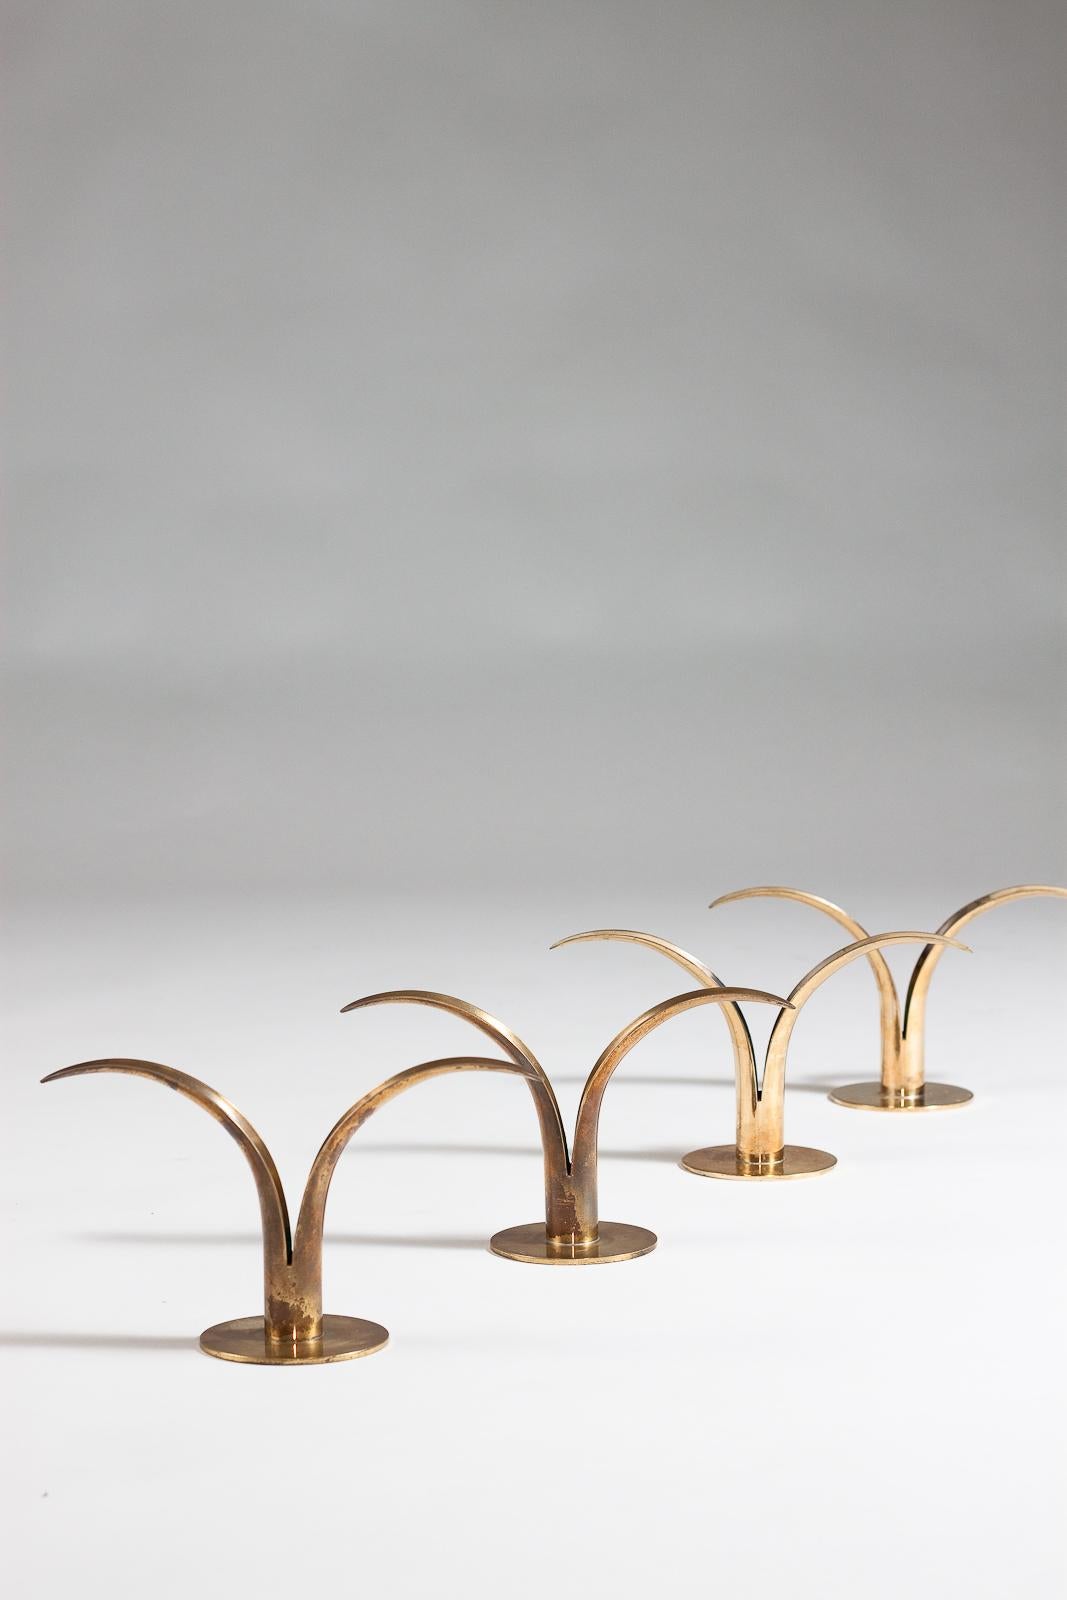 Ivar Ålenius Björk, set of 4 Liljan brass candlesticks, Ystad Metall, 1940's  For Sale 1